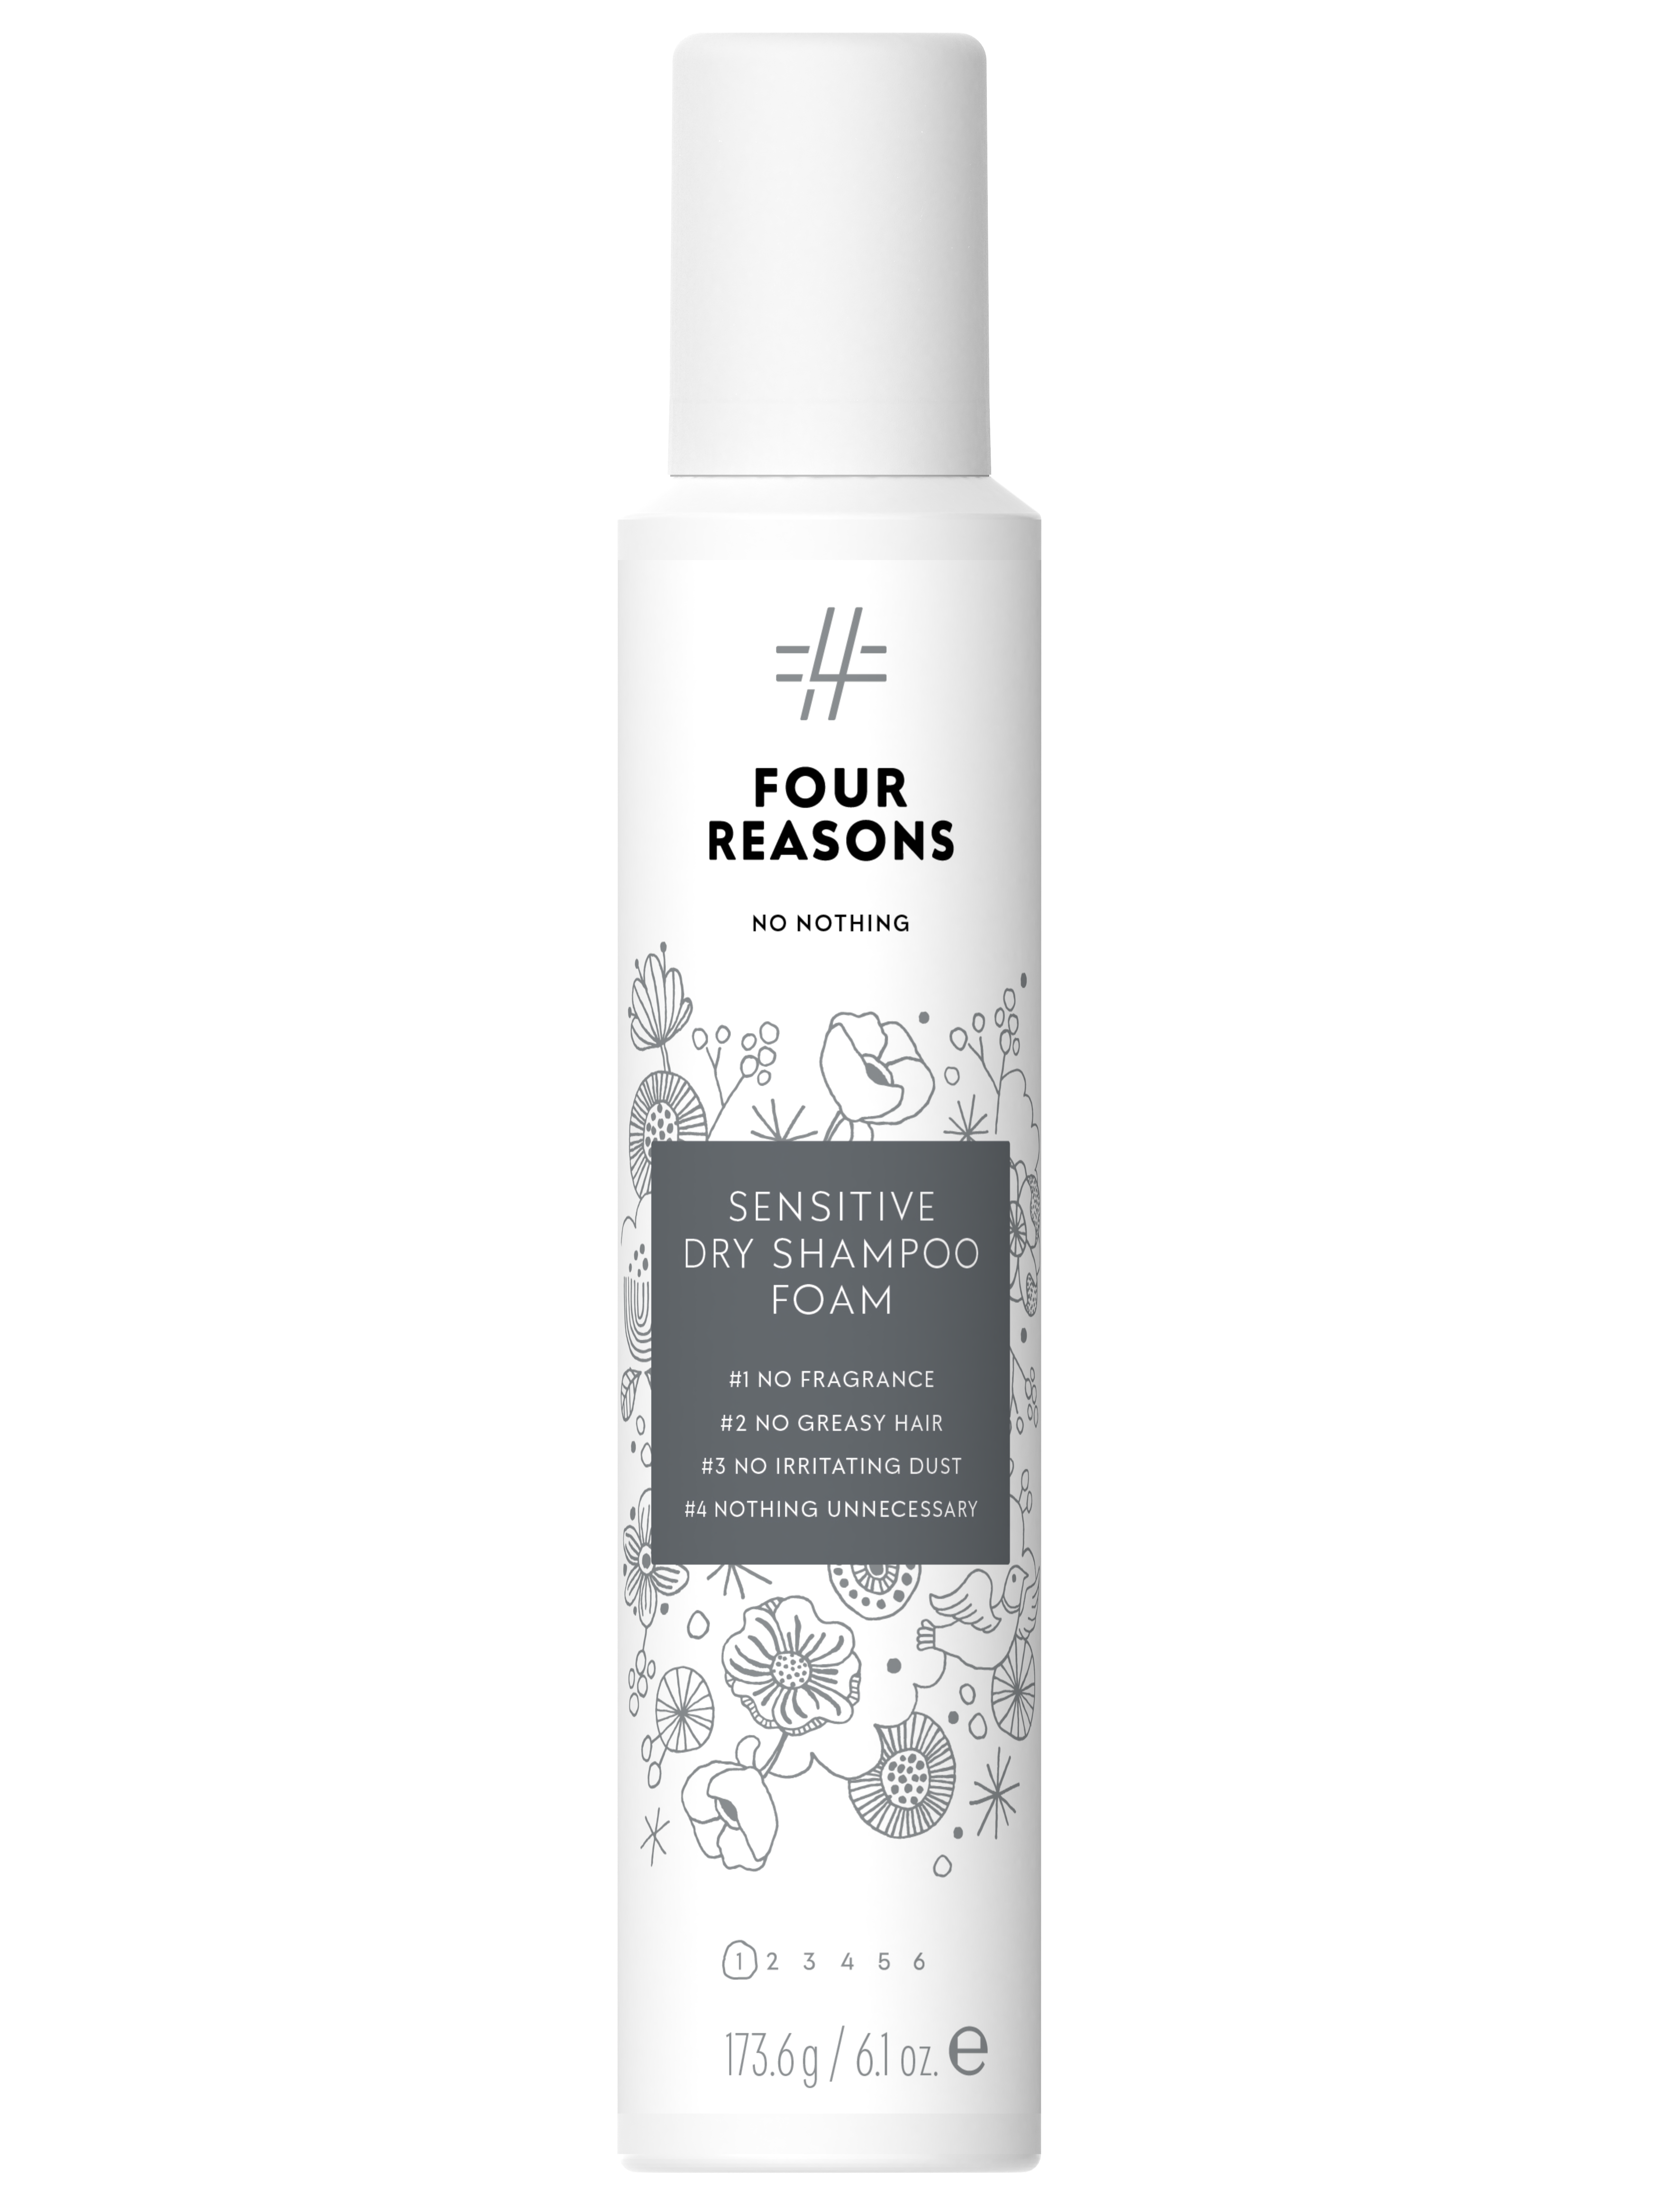 Four Reasons No Nothing Sensitive Dry Shampoo Foam, 173,6 g